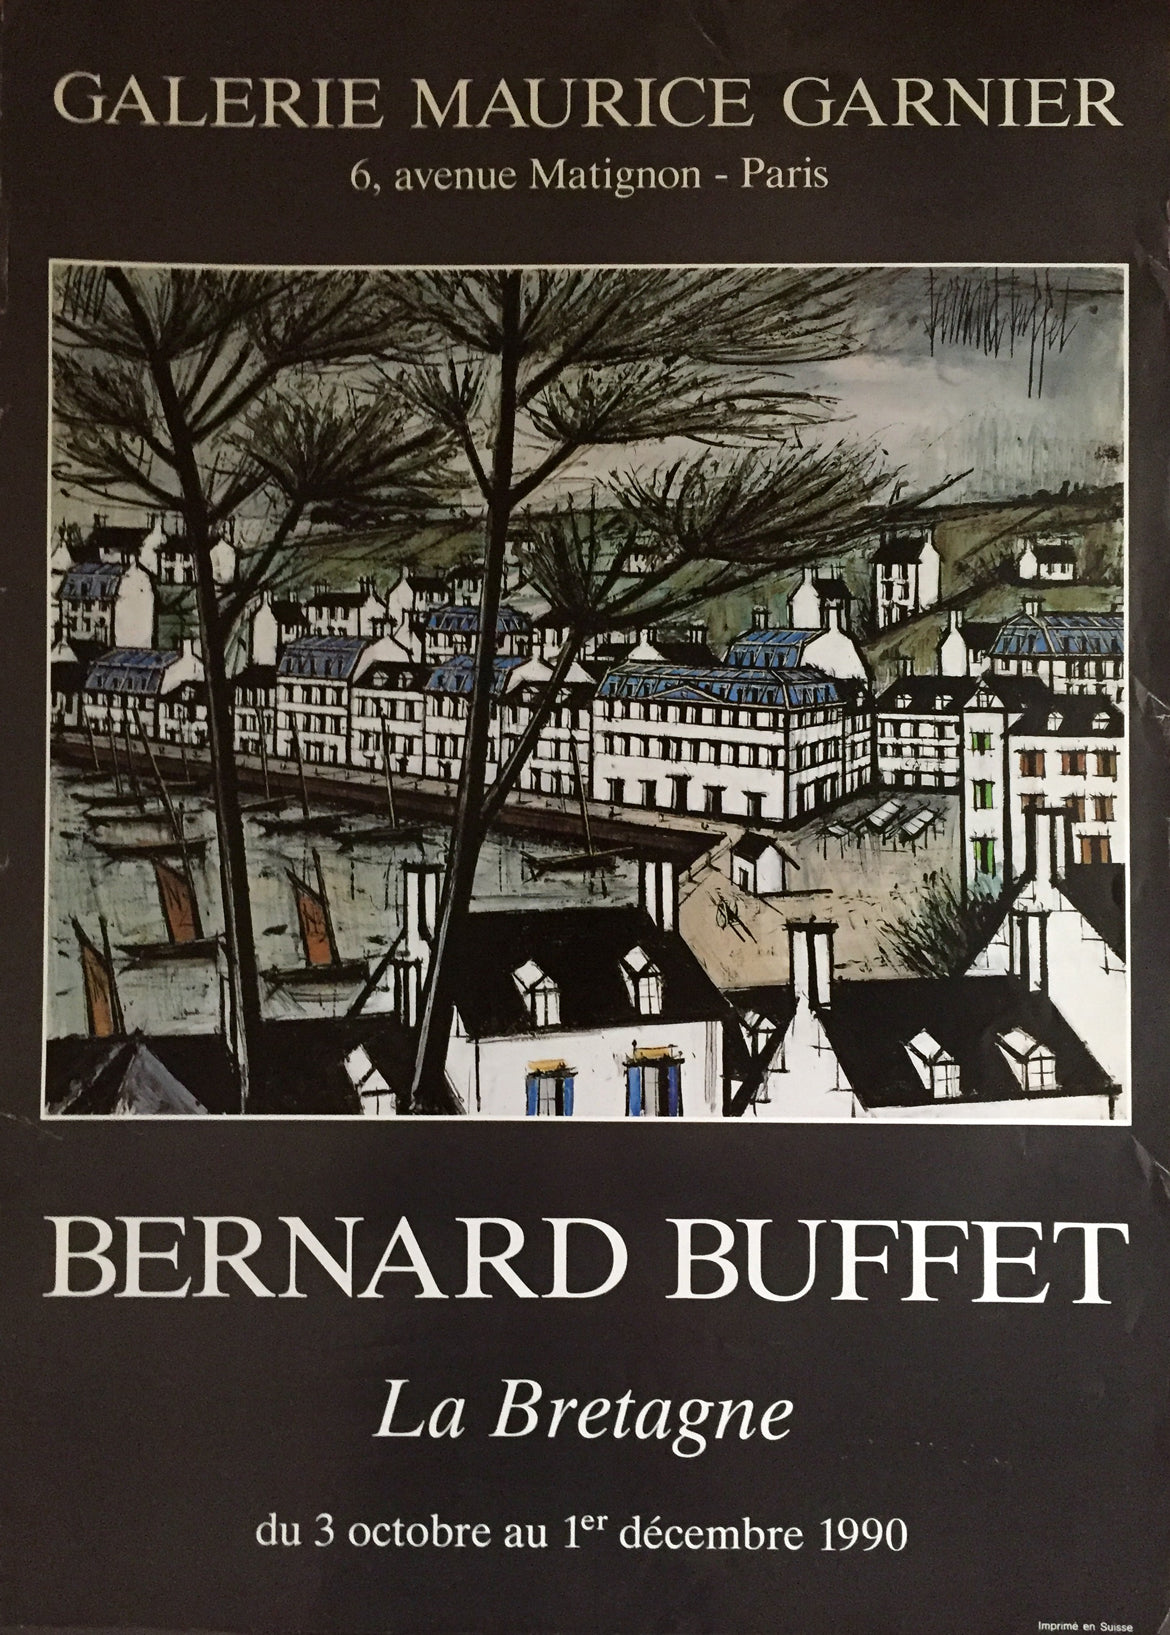 Affiche originale Galerie Maurice Garnier "La Bretagne" Bernard Buffet, 1990